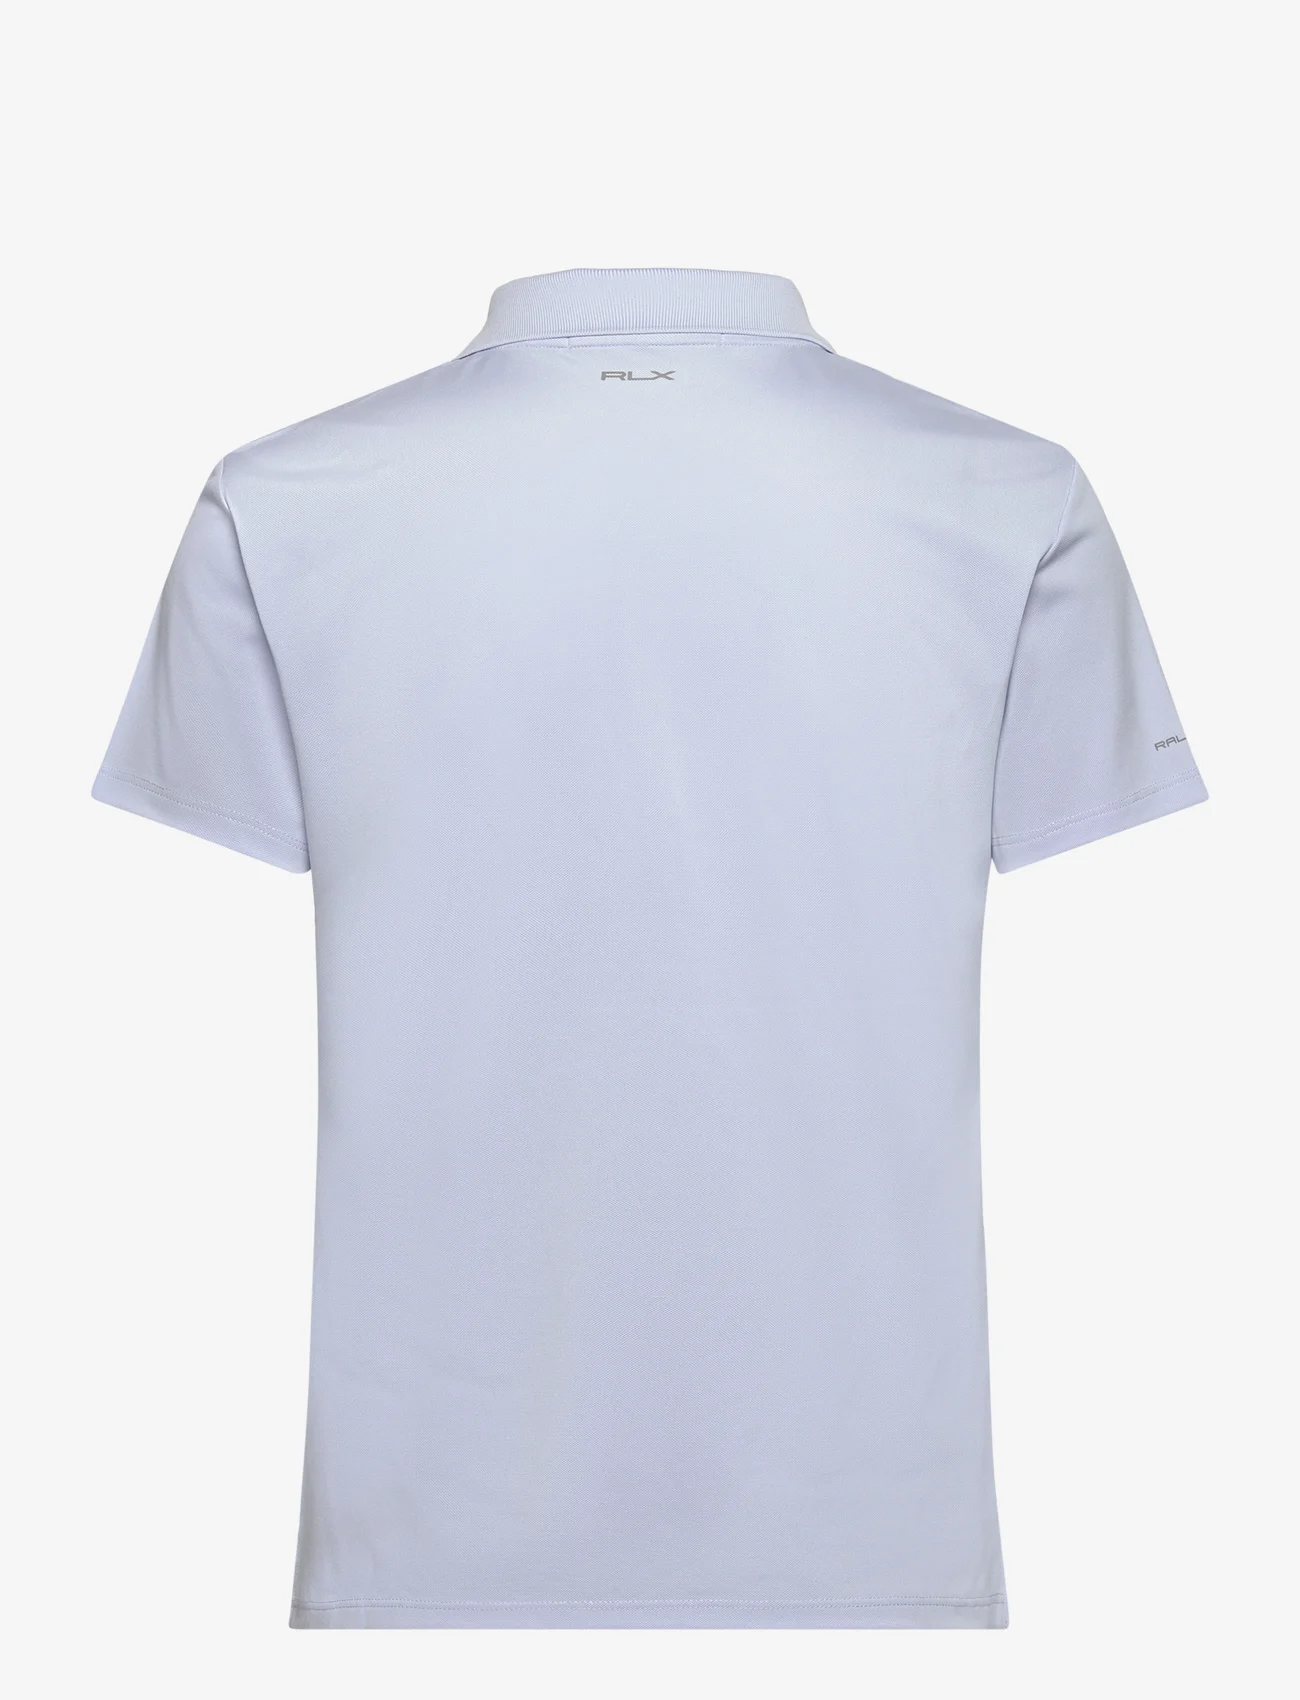 Ralph Lauren Golf - Classic Fit Tour Polo Shirt - polo marškinėliai - oxford blue - 1